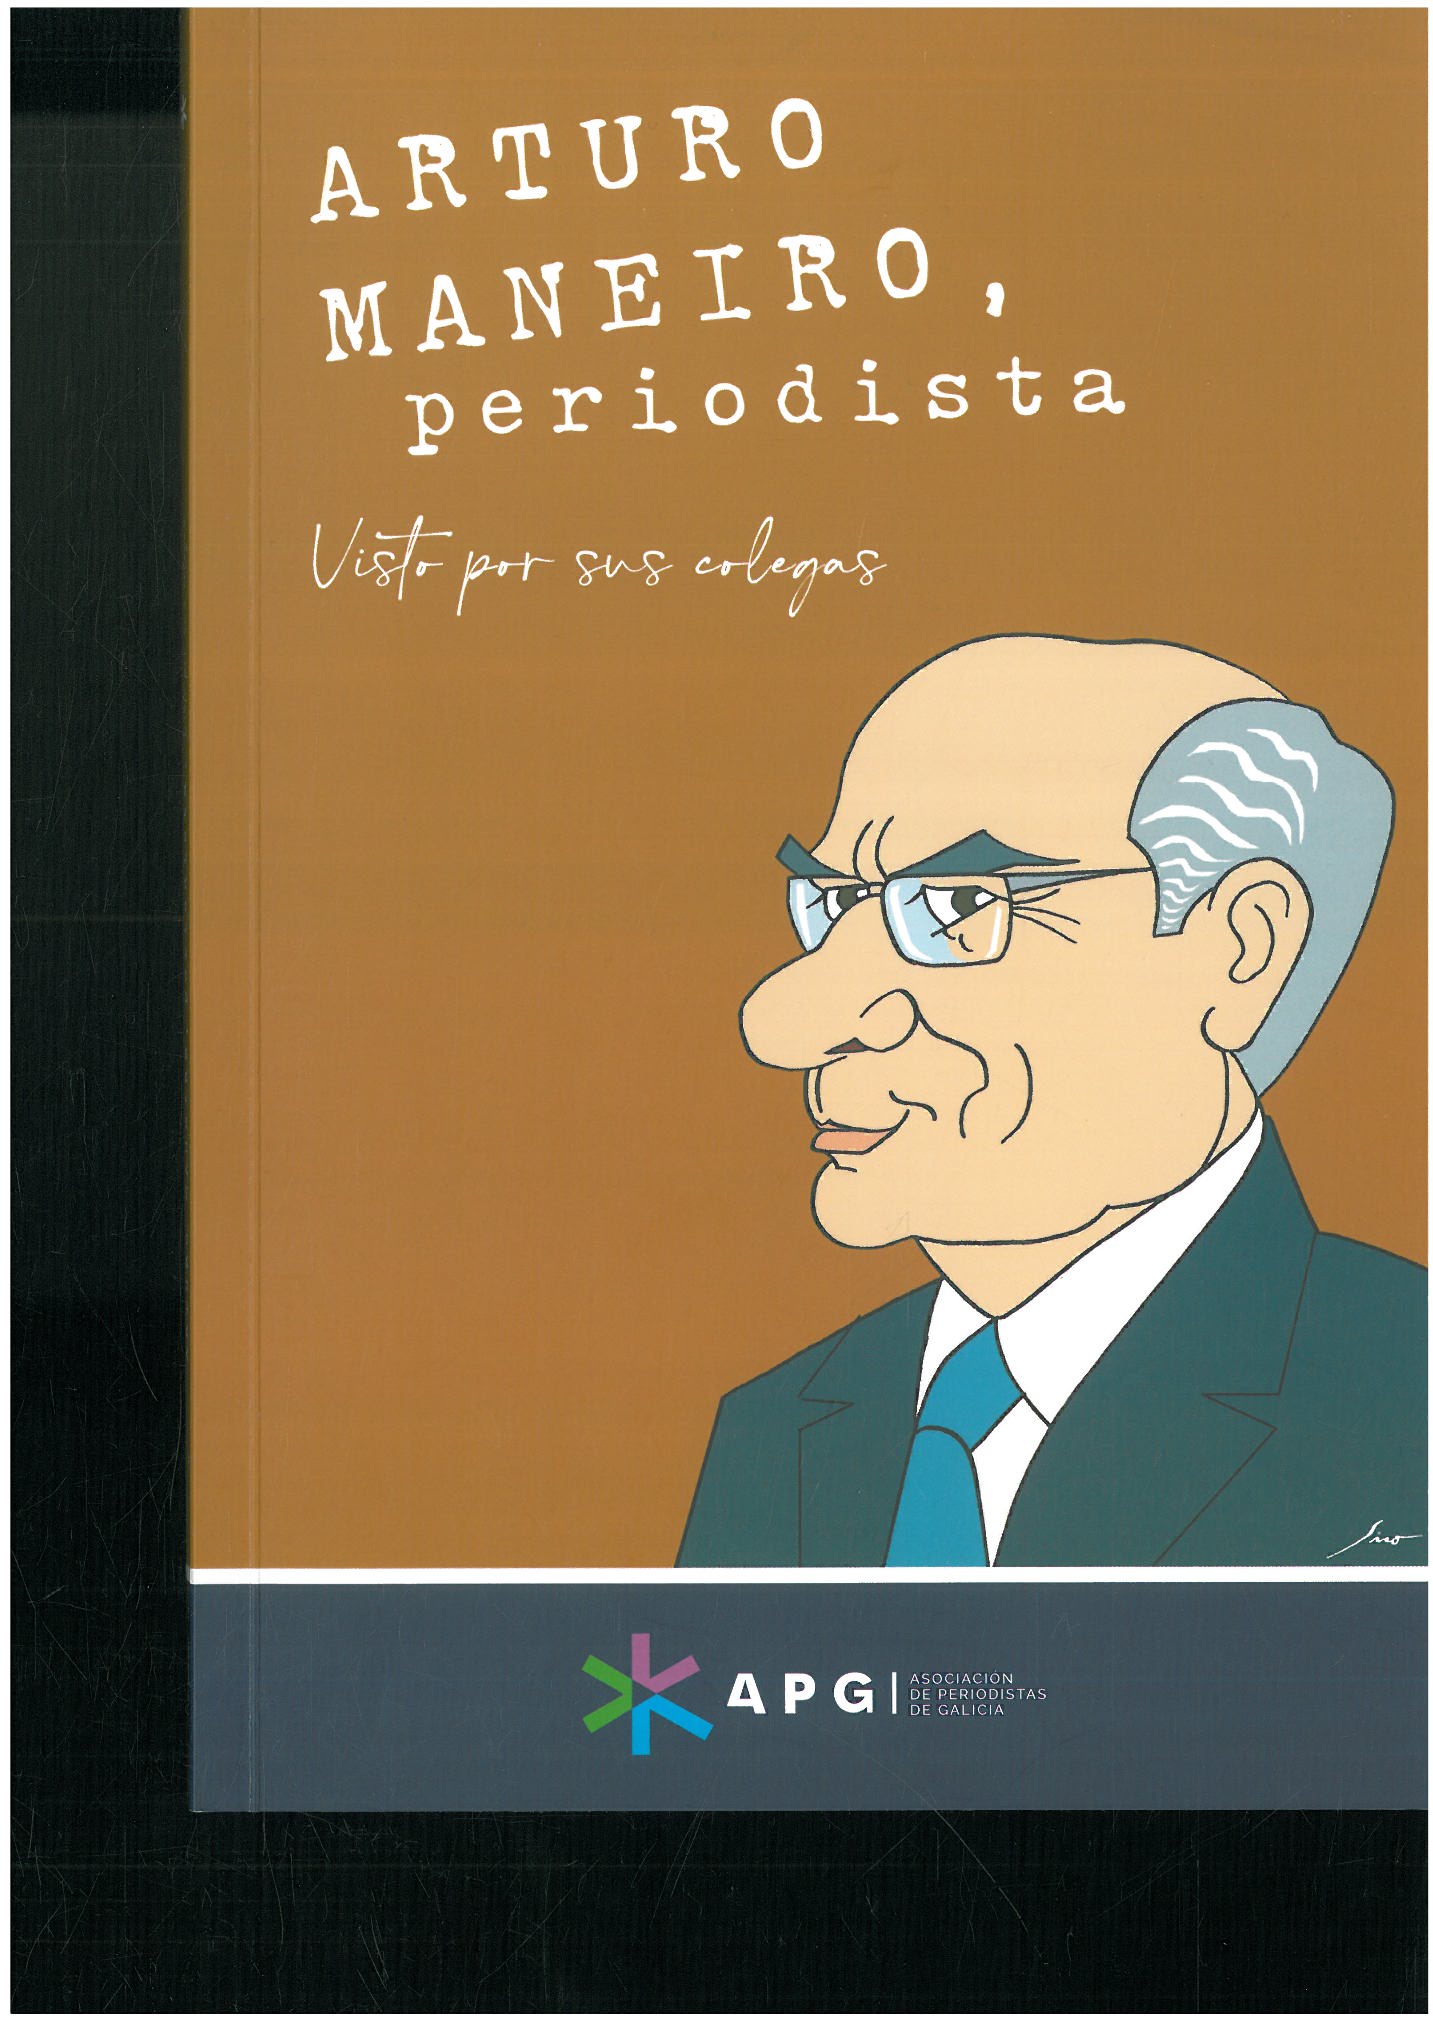 Imagen de portada del libro Arturo Maneiro, periodista